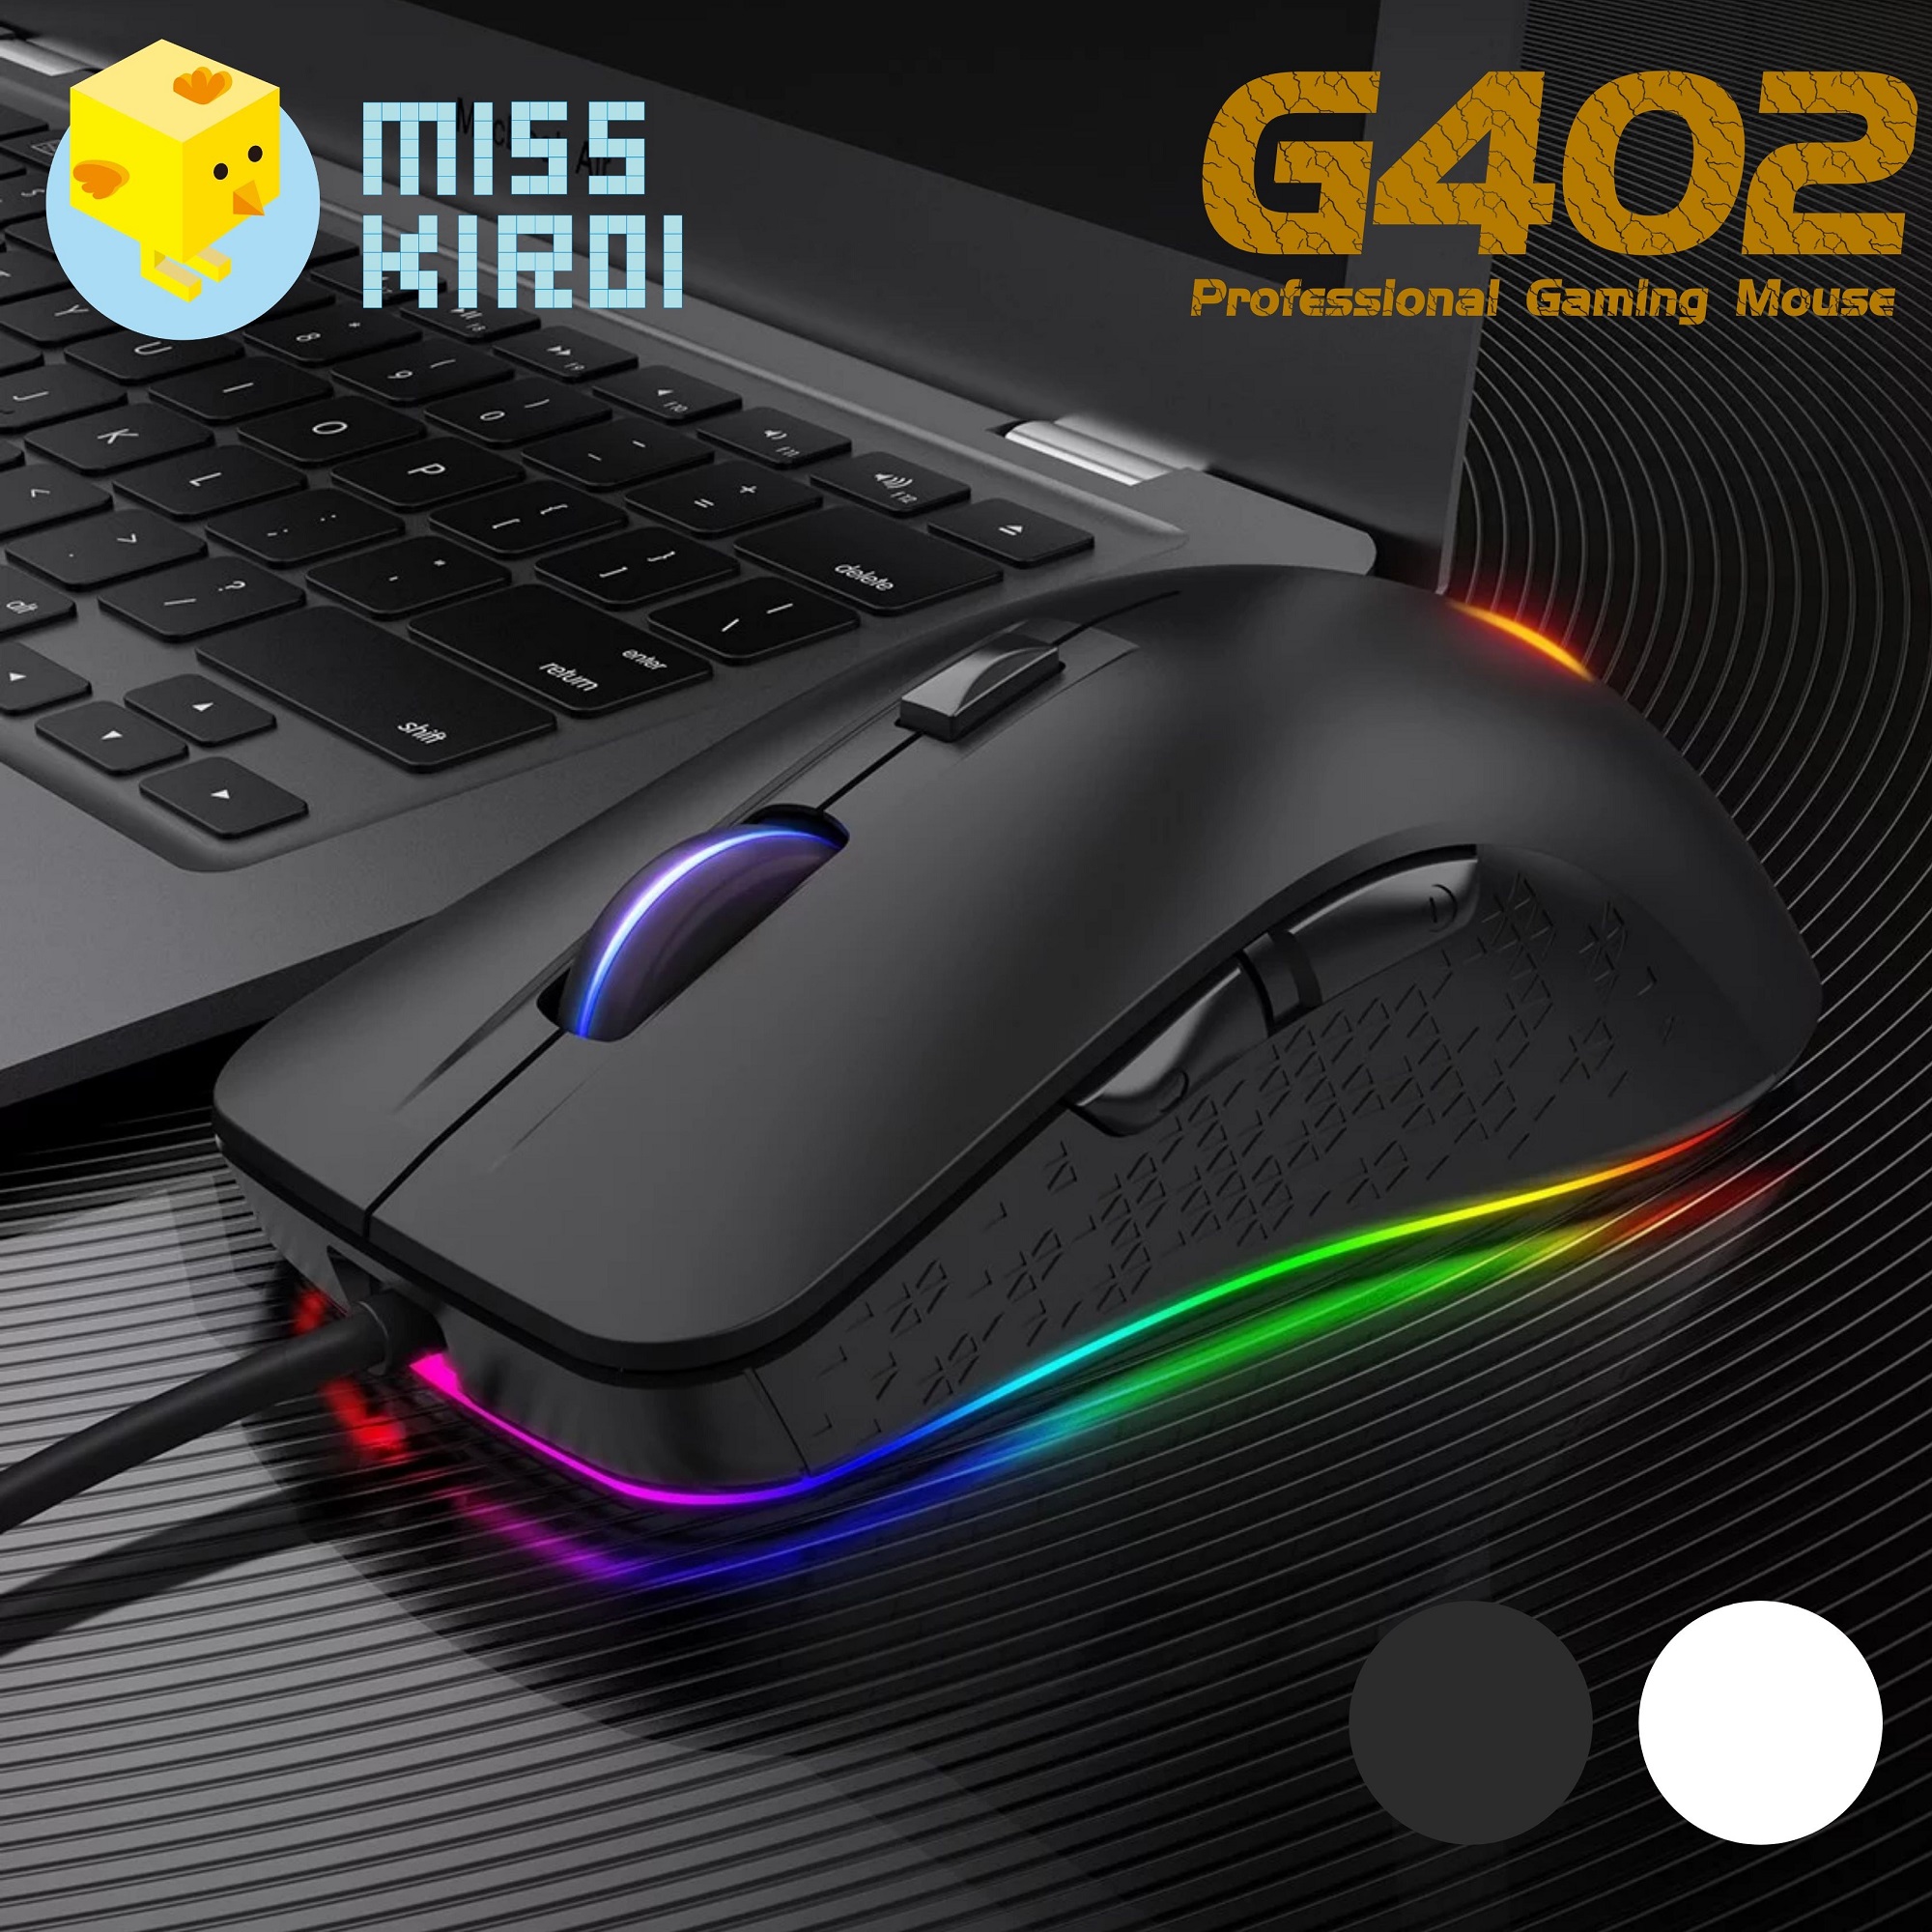 [Professional Gaming] Miss Kiroi G402 RGB เมาส์เกมมิ่ง Gaming Mouse (PUBG Auto Spraying Adjustment) ออฟติคอล ตั้งมาโครคีย์ได้ ความแม่นยำสูงปรับ DPI 500-4000 เหมาะกับเกมFPS MoBA เม้าส์